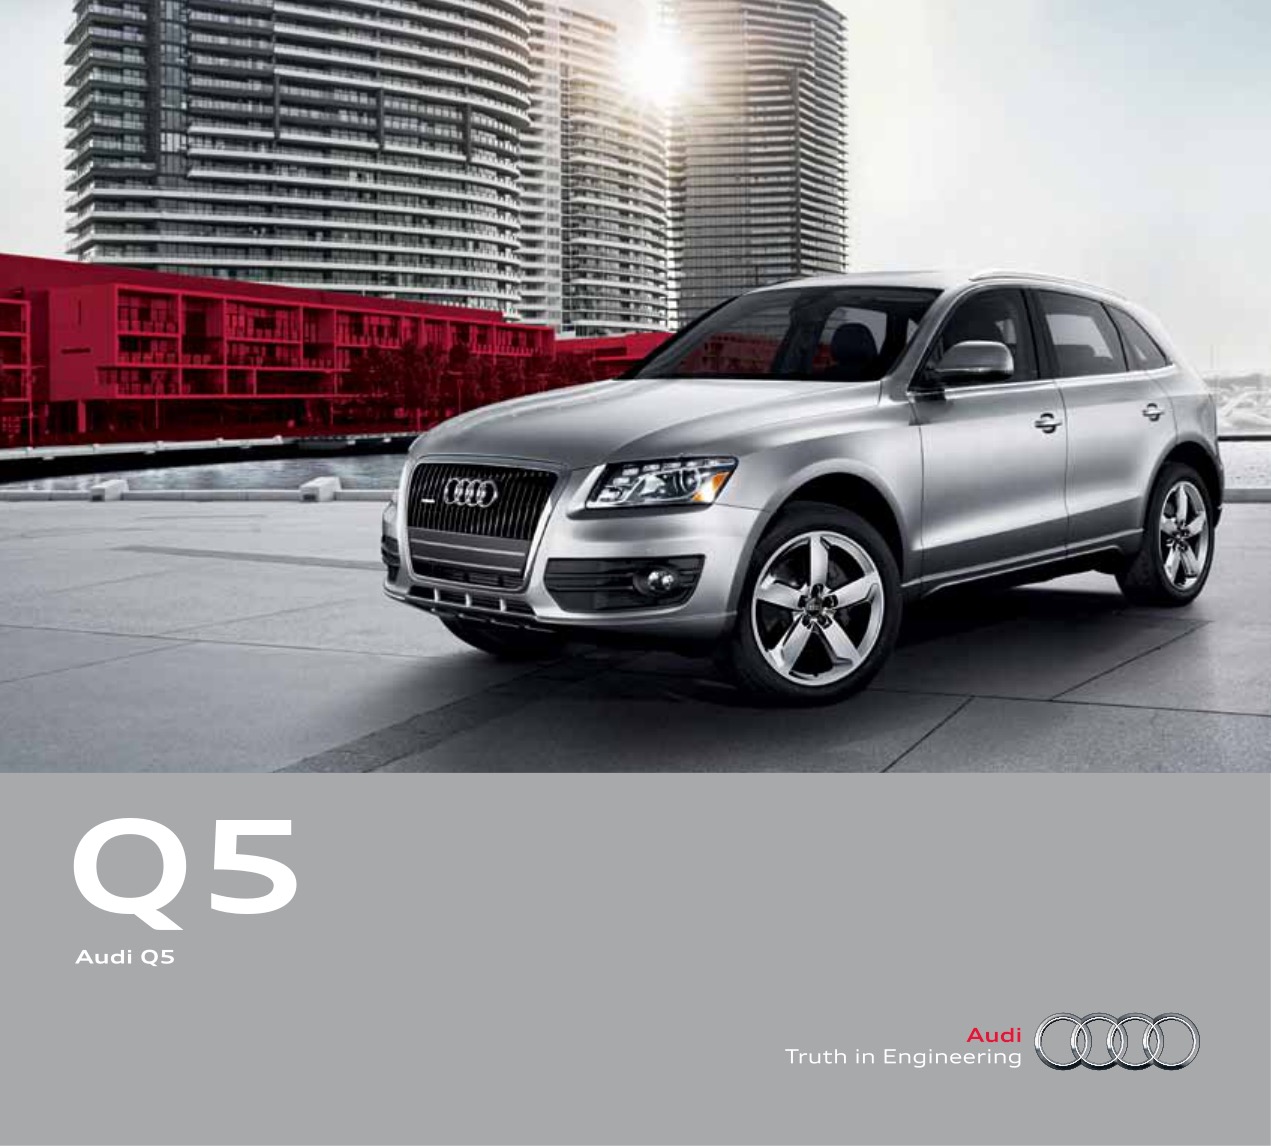 2012 Audi Q5 Brochure